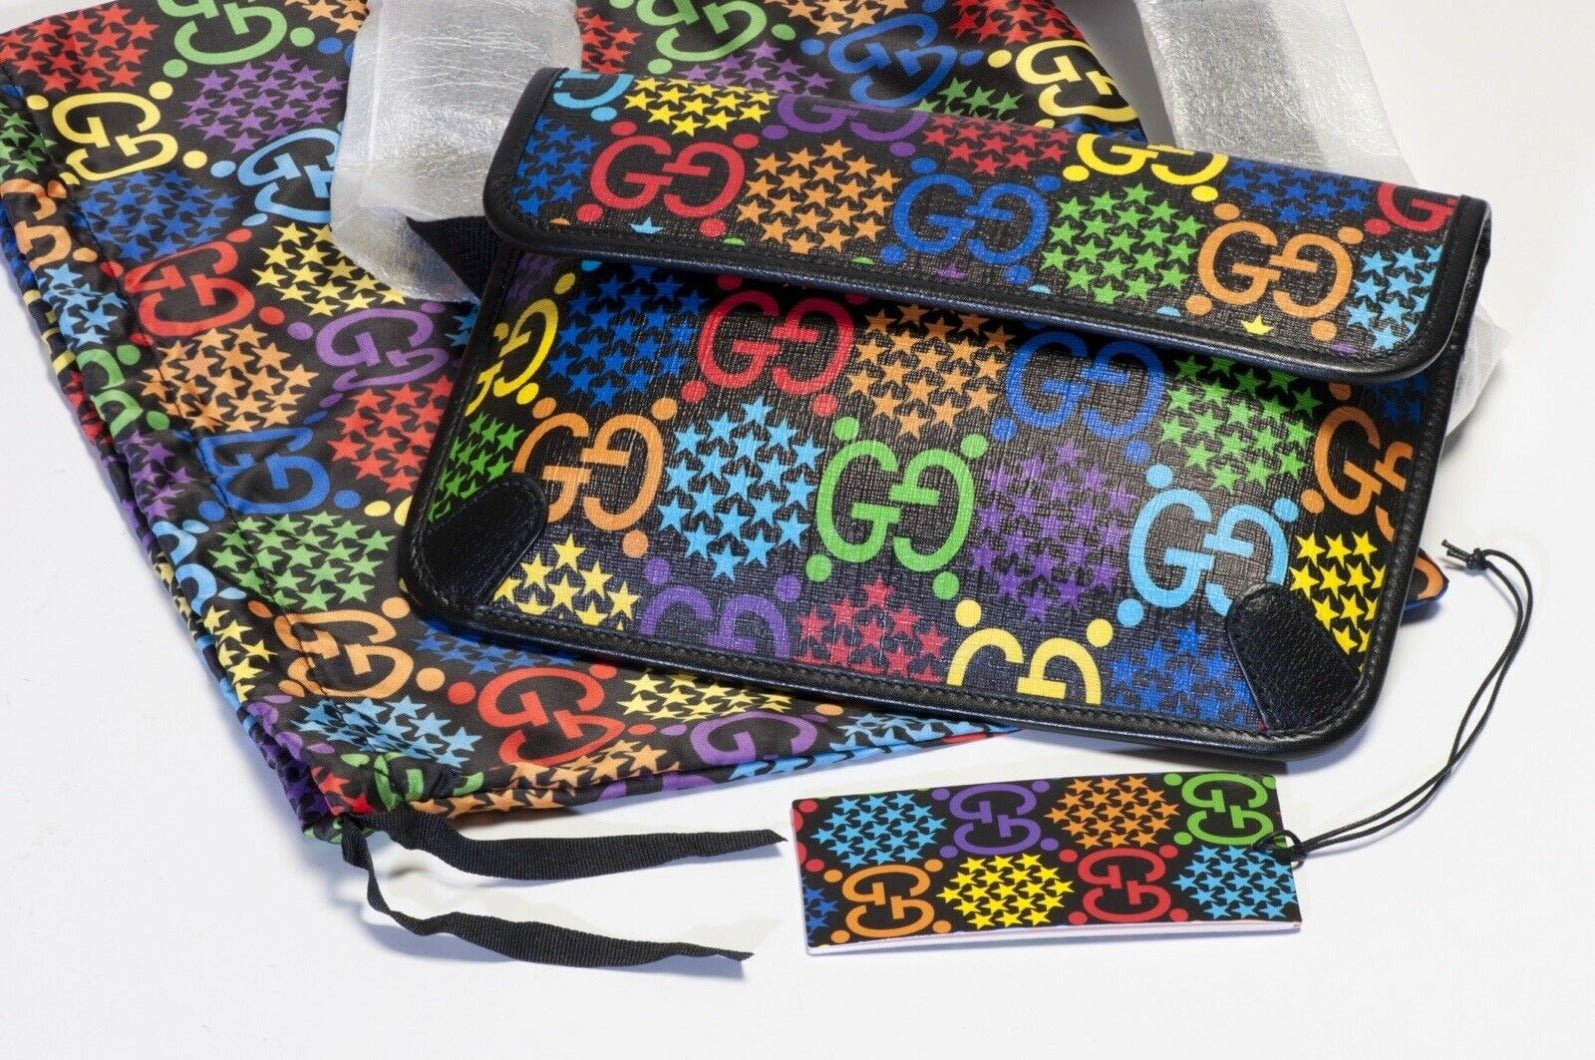 Gucci GG Psychedelic Neon Multicolor Monogram Fanny Pack Waist Bag